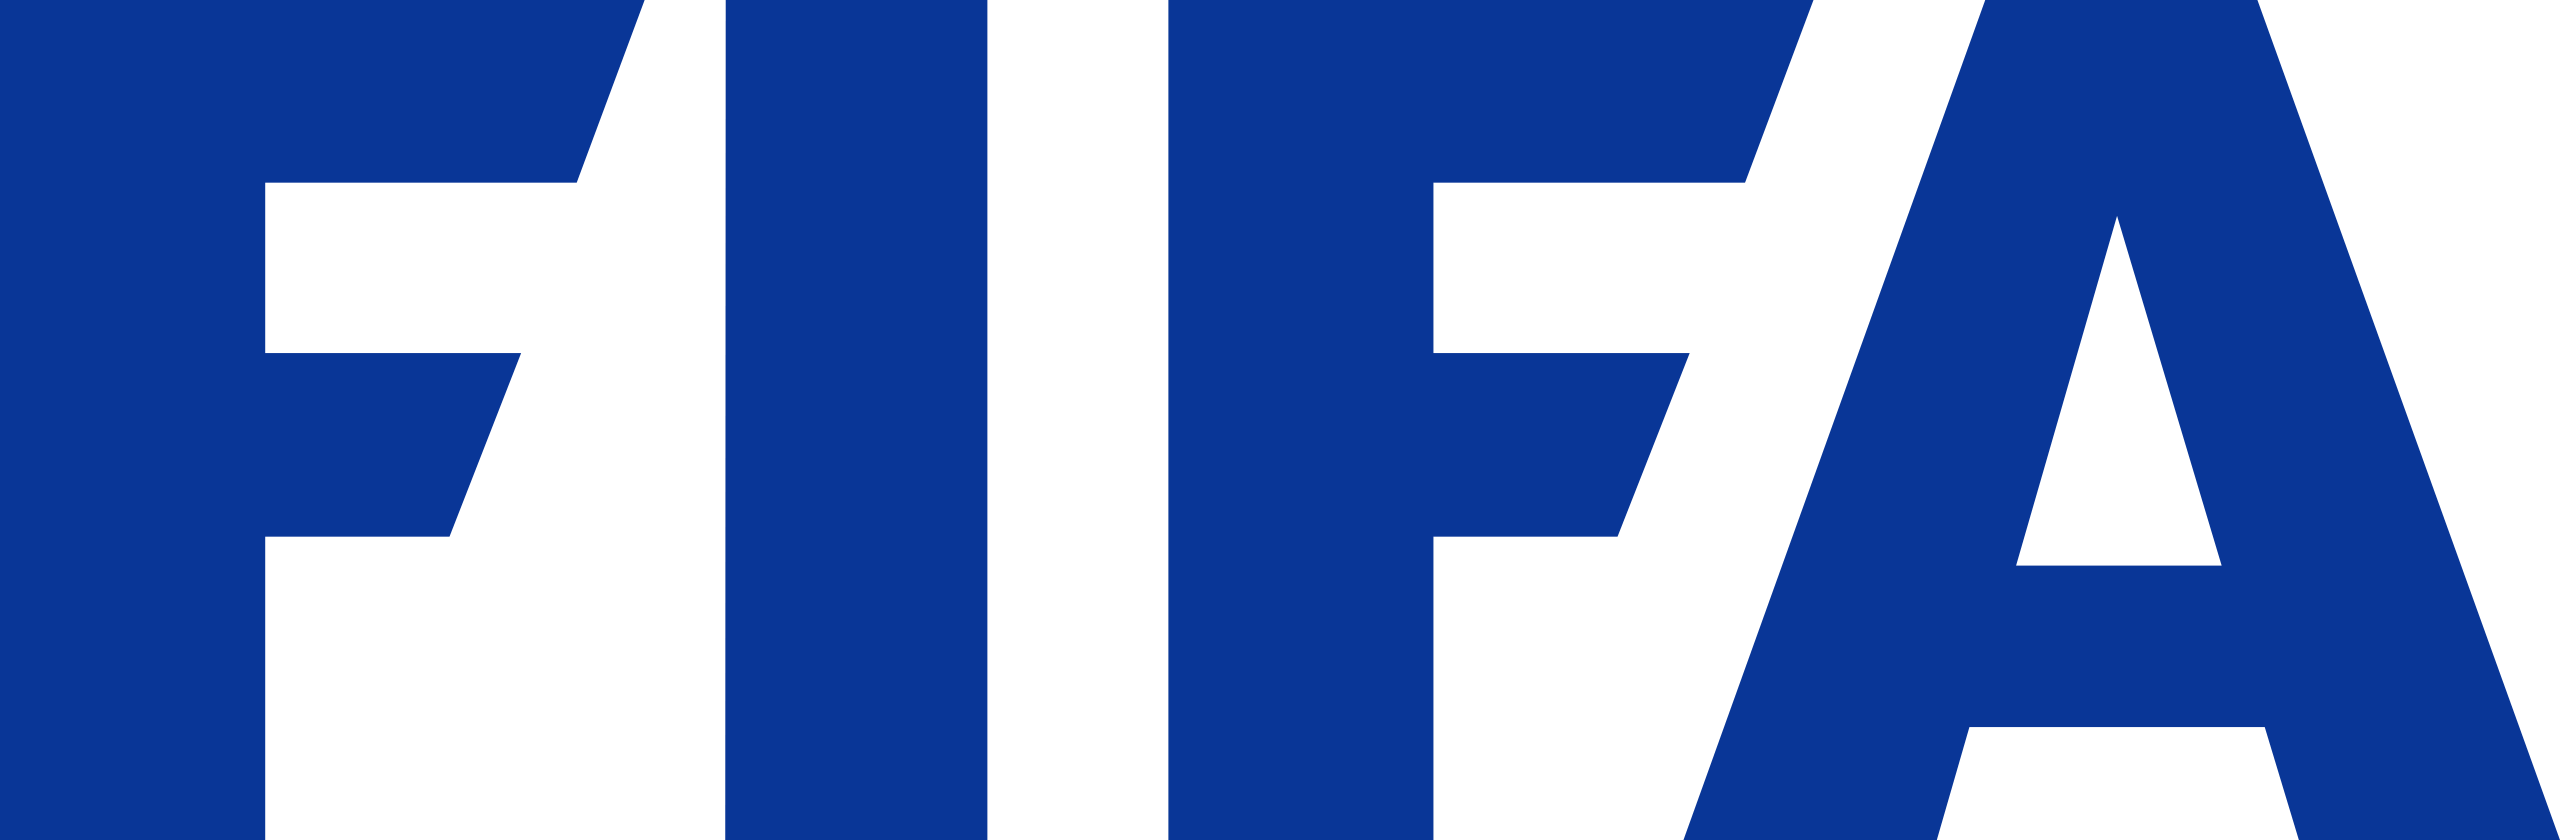 FIFA logo png large size